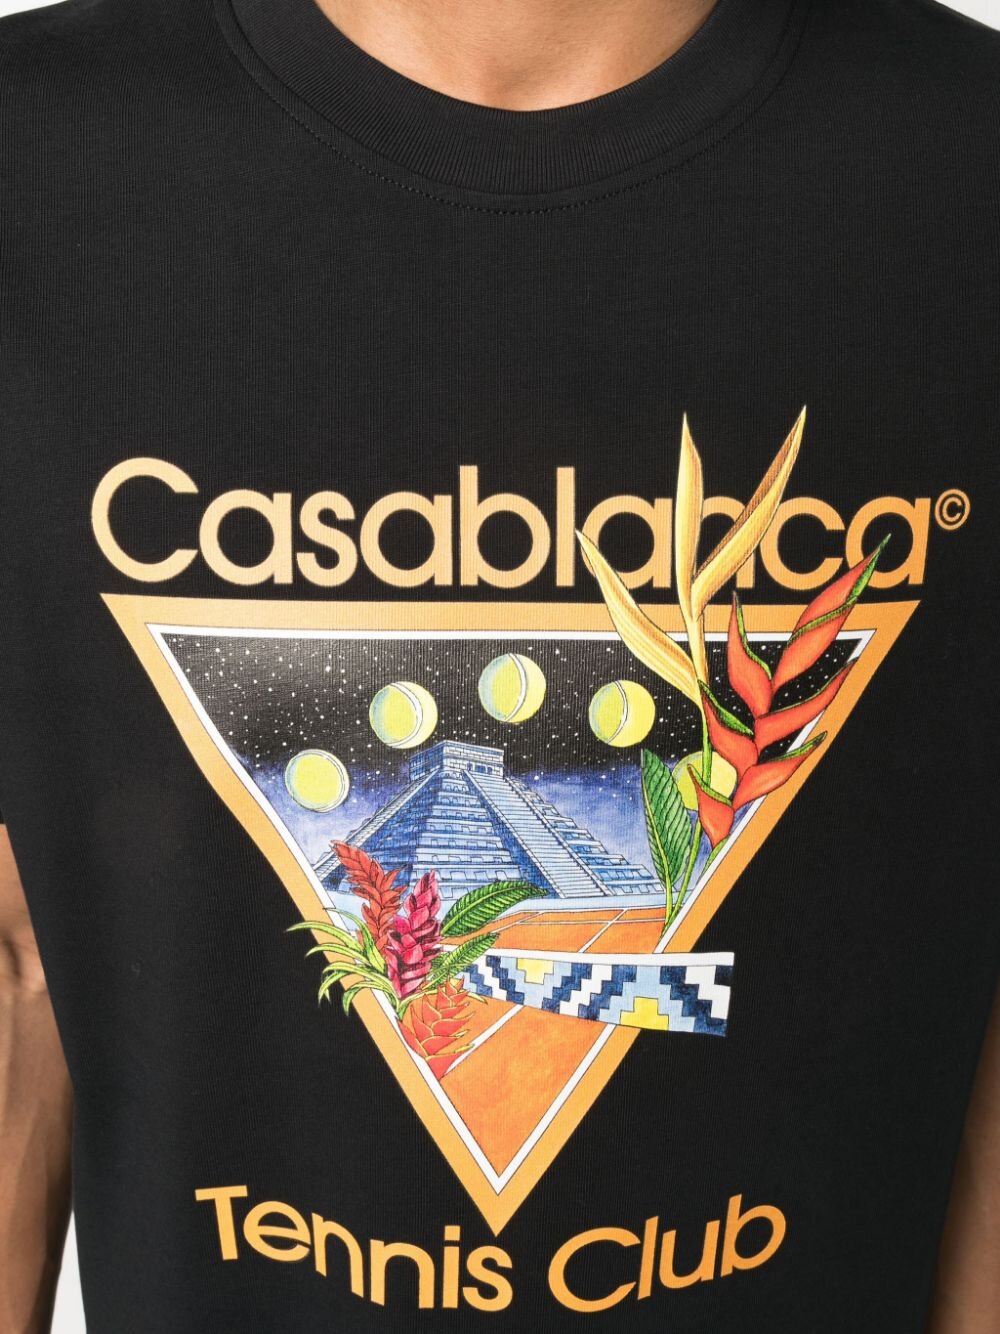 Casablanca Tennis Club T-shirt in Black